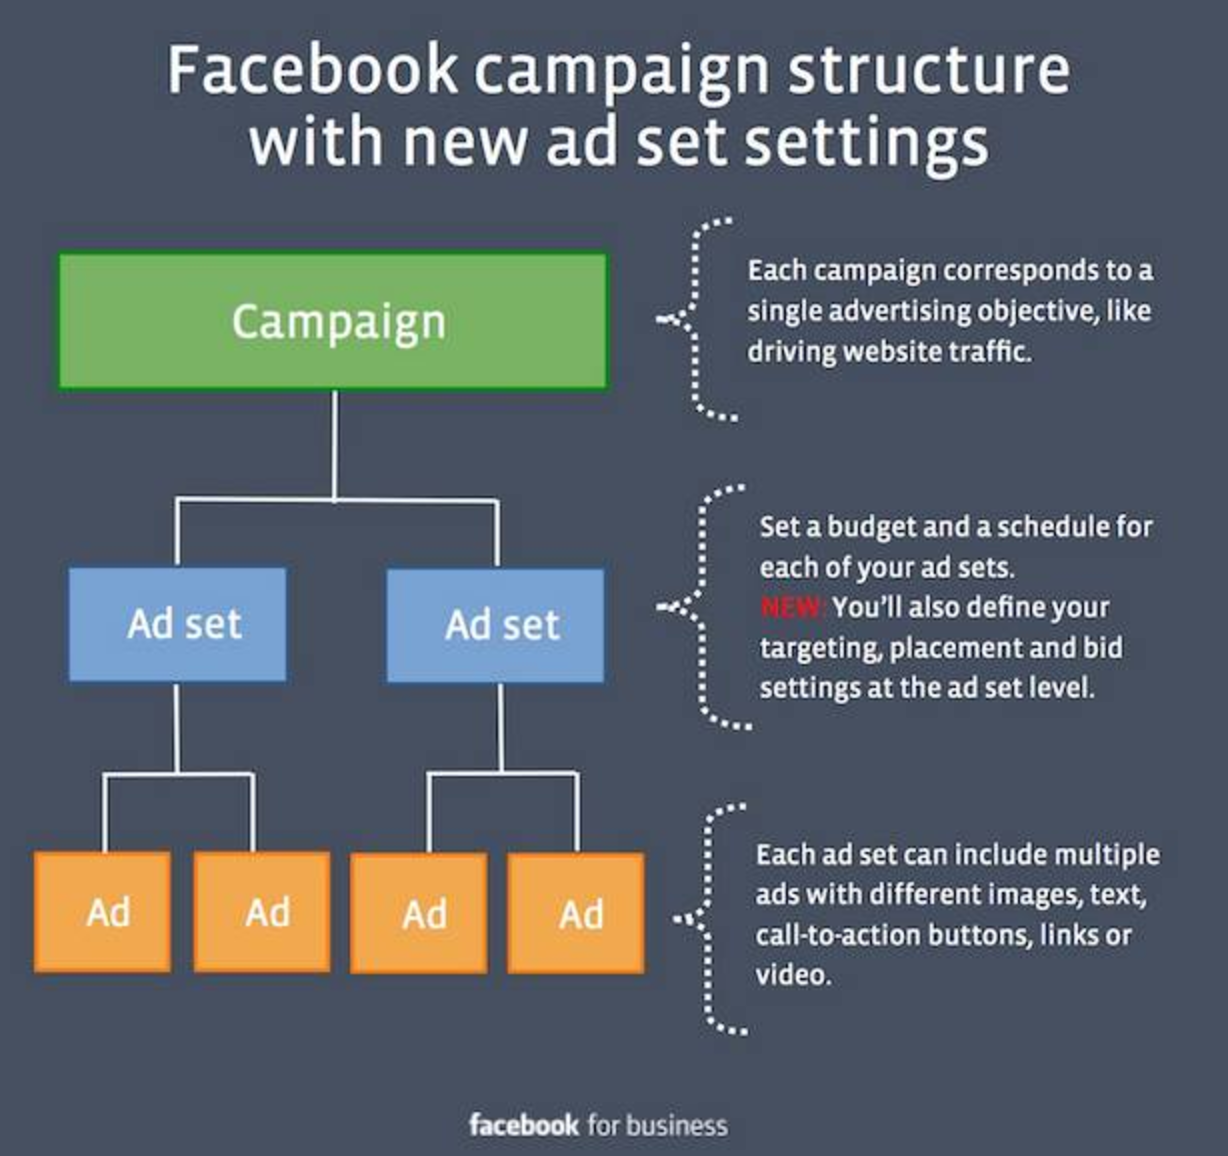 Advertising campaign is. Структура Facebook. Структура рекламы Фейсбук. Структура рекламной кампании. Facebook ads.